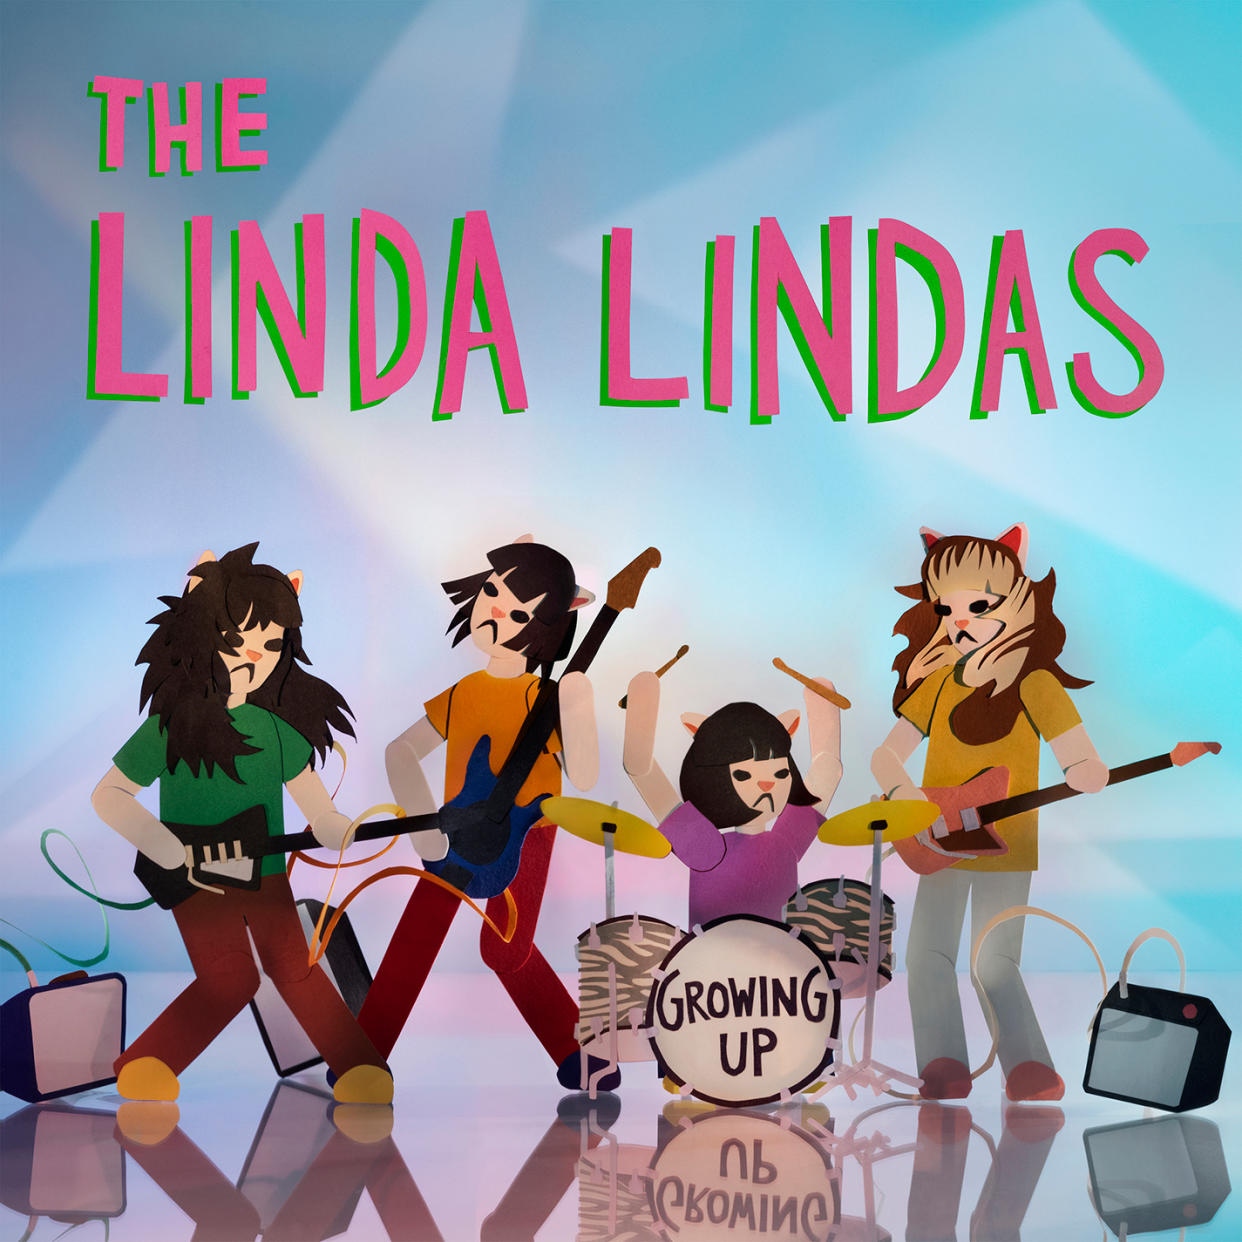 The Linda Lindas' 